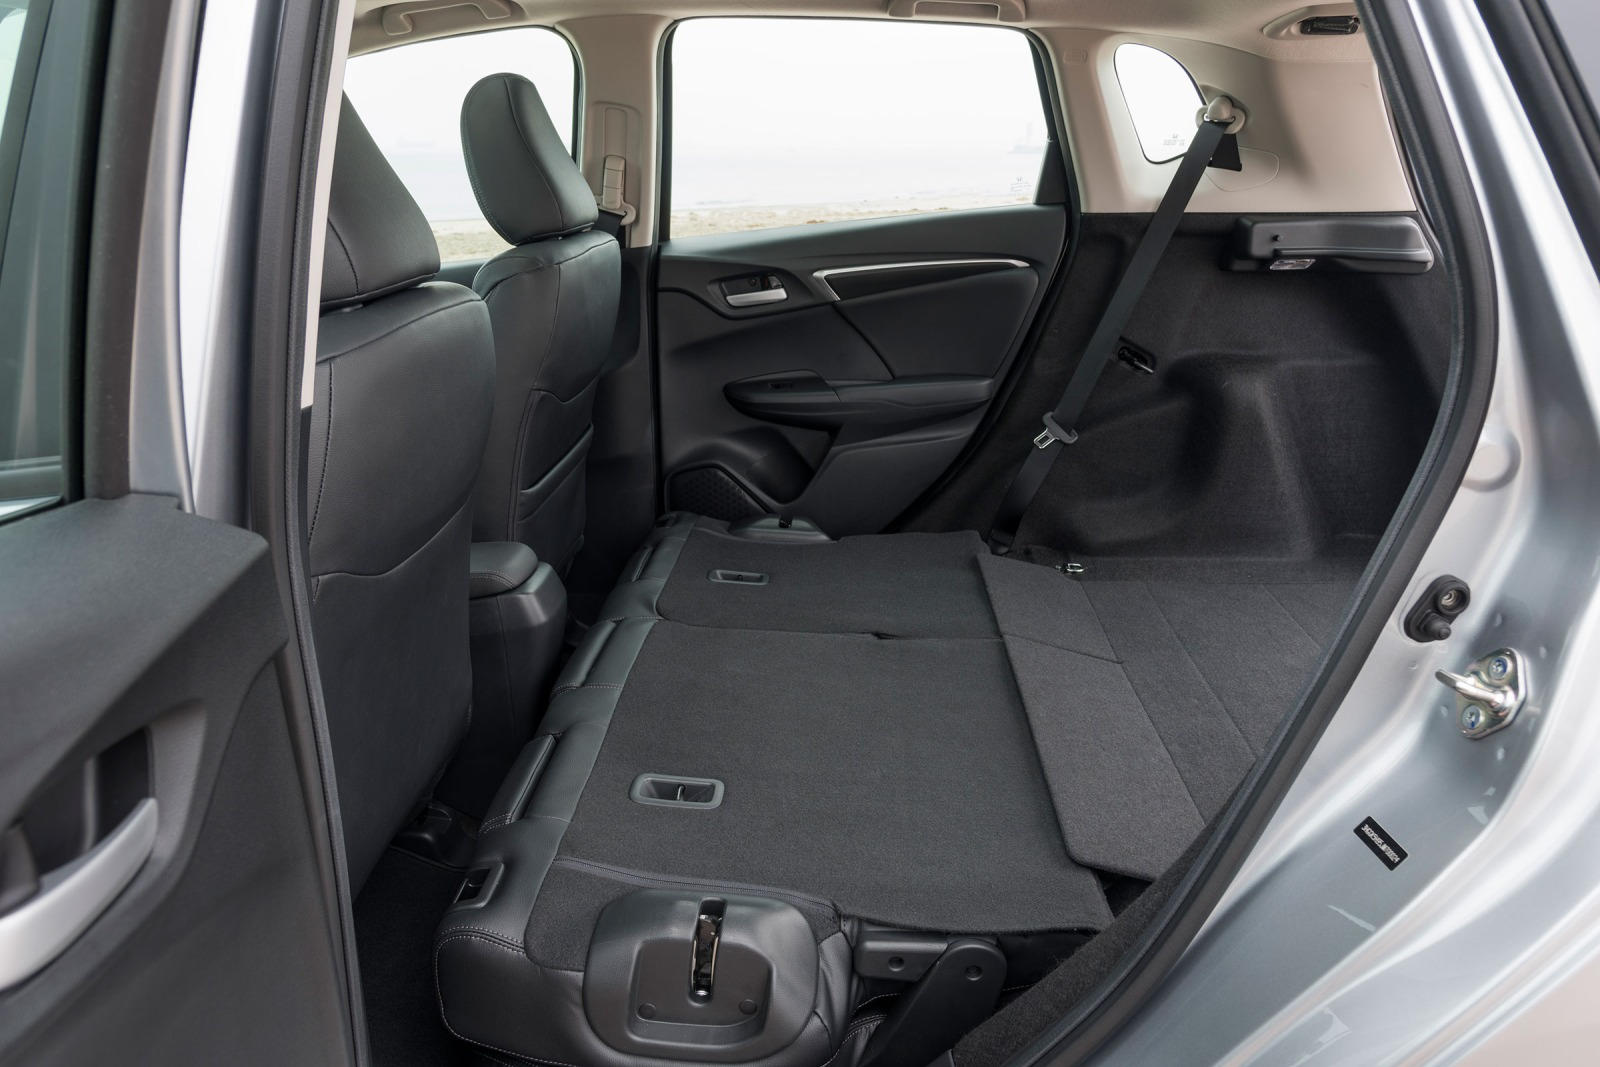 2020 Honda Fit Cargo Space and Interior Dimensions - Battison Honda